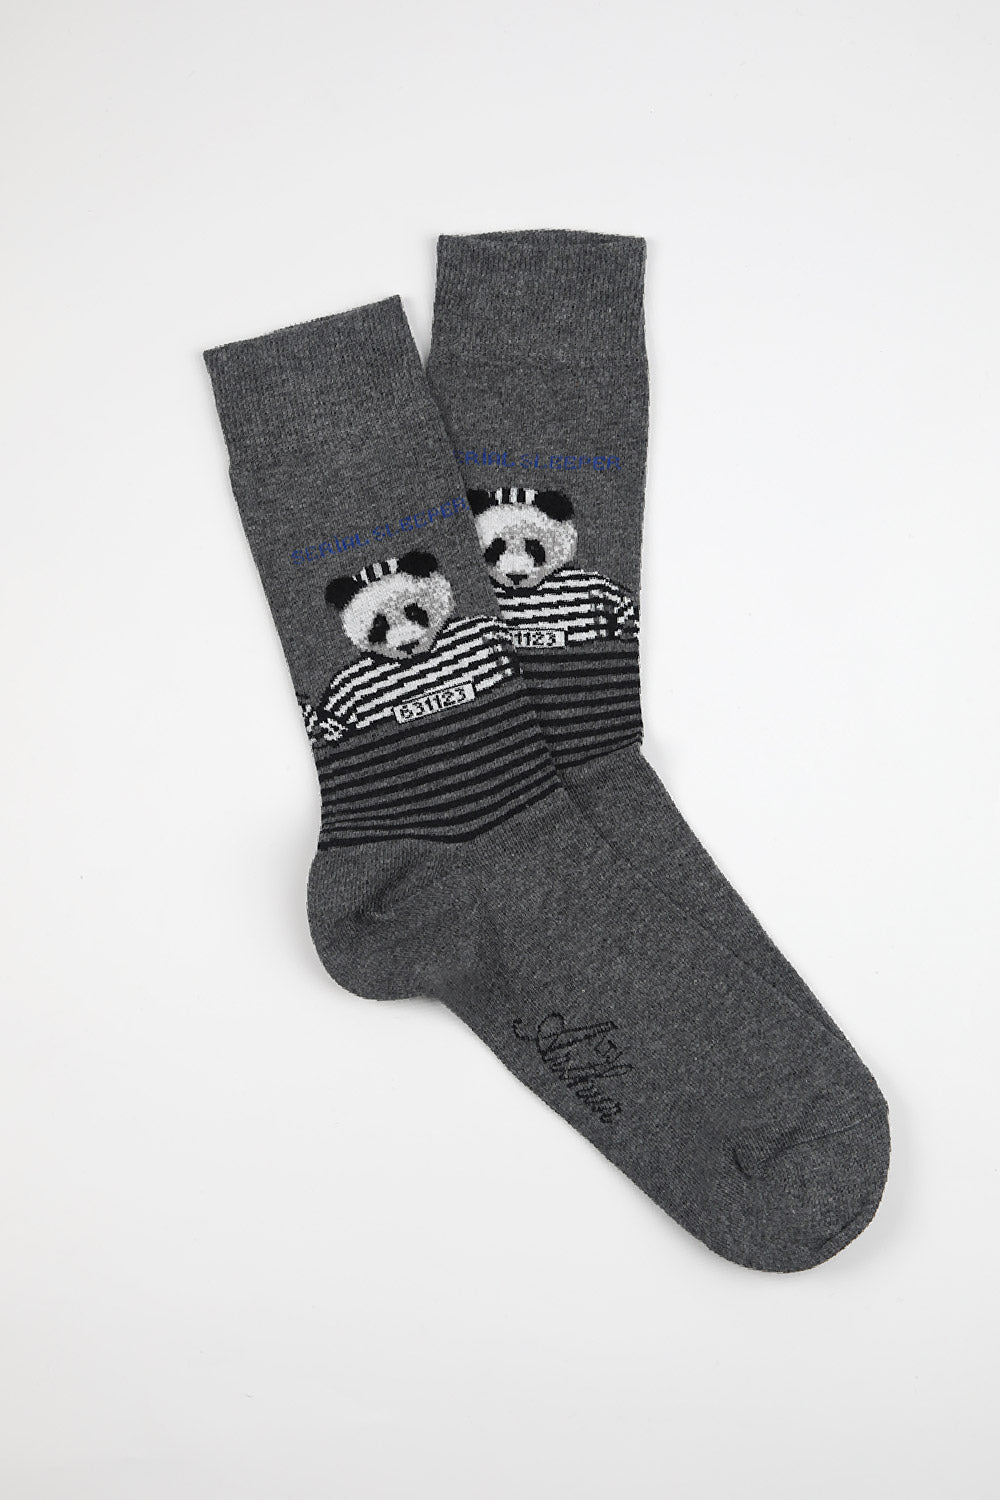 Serial Sleeper Warm Cotton Socks